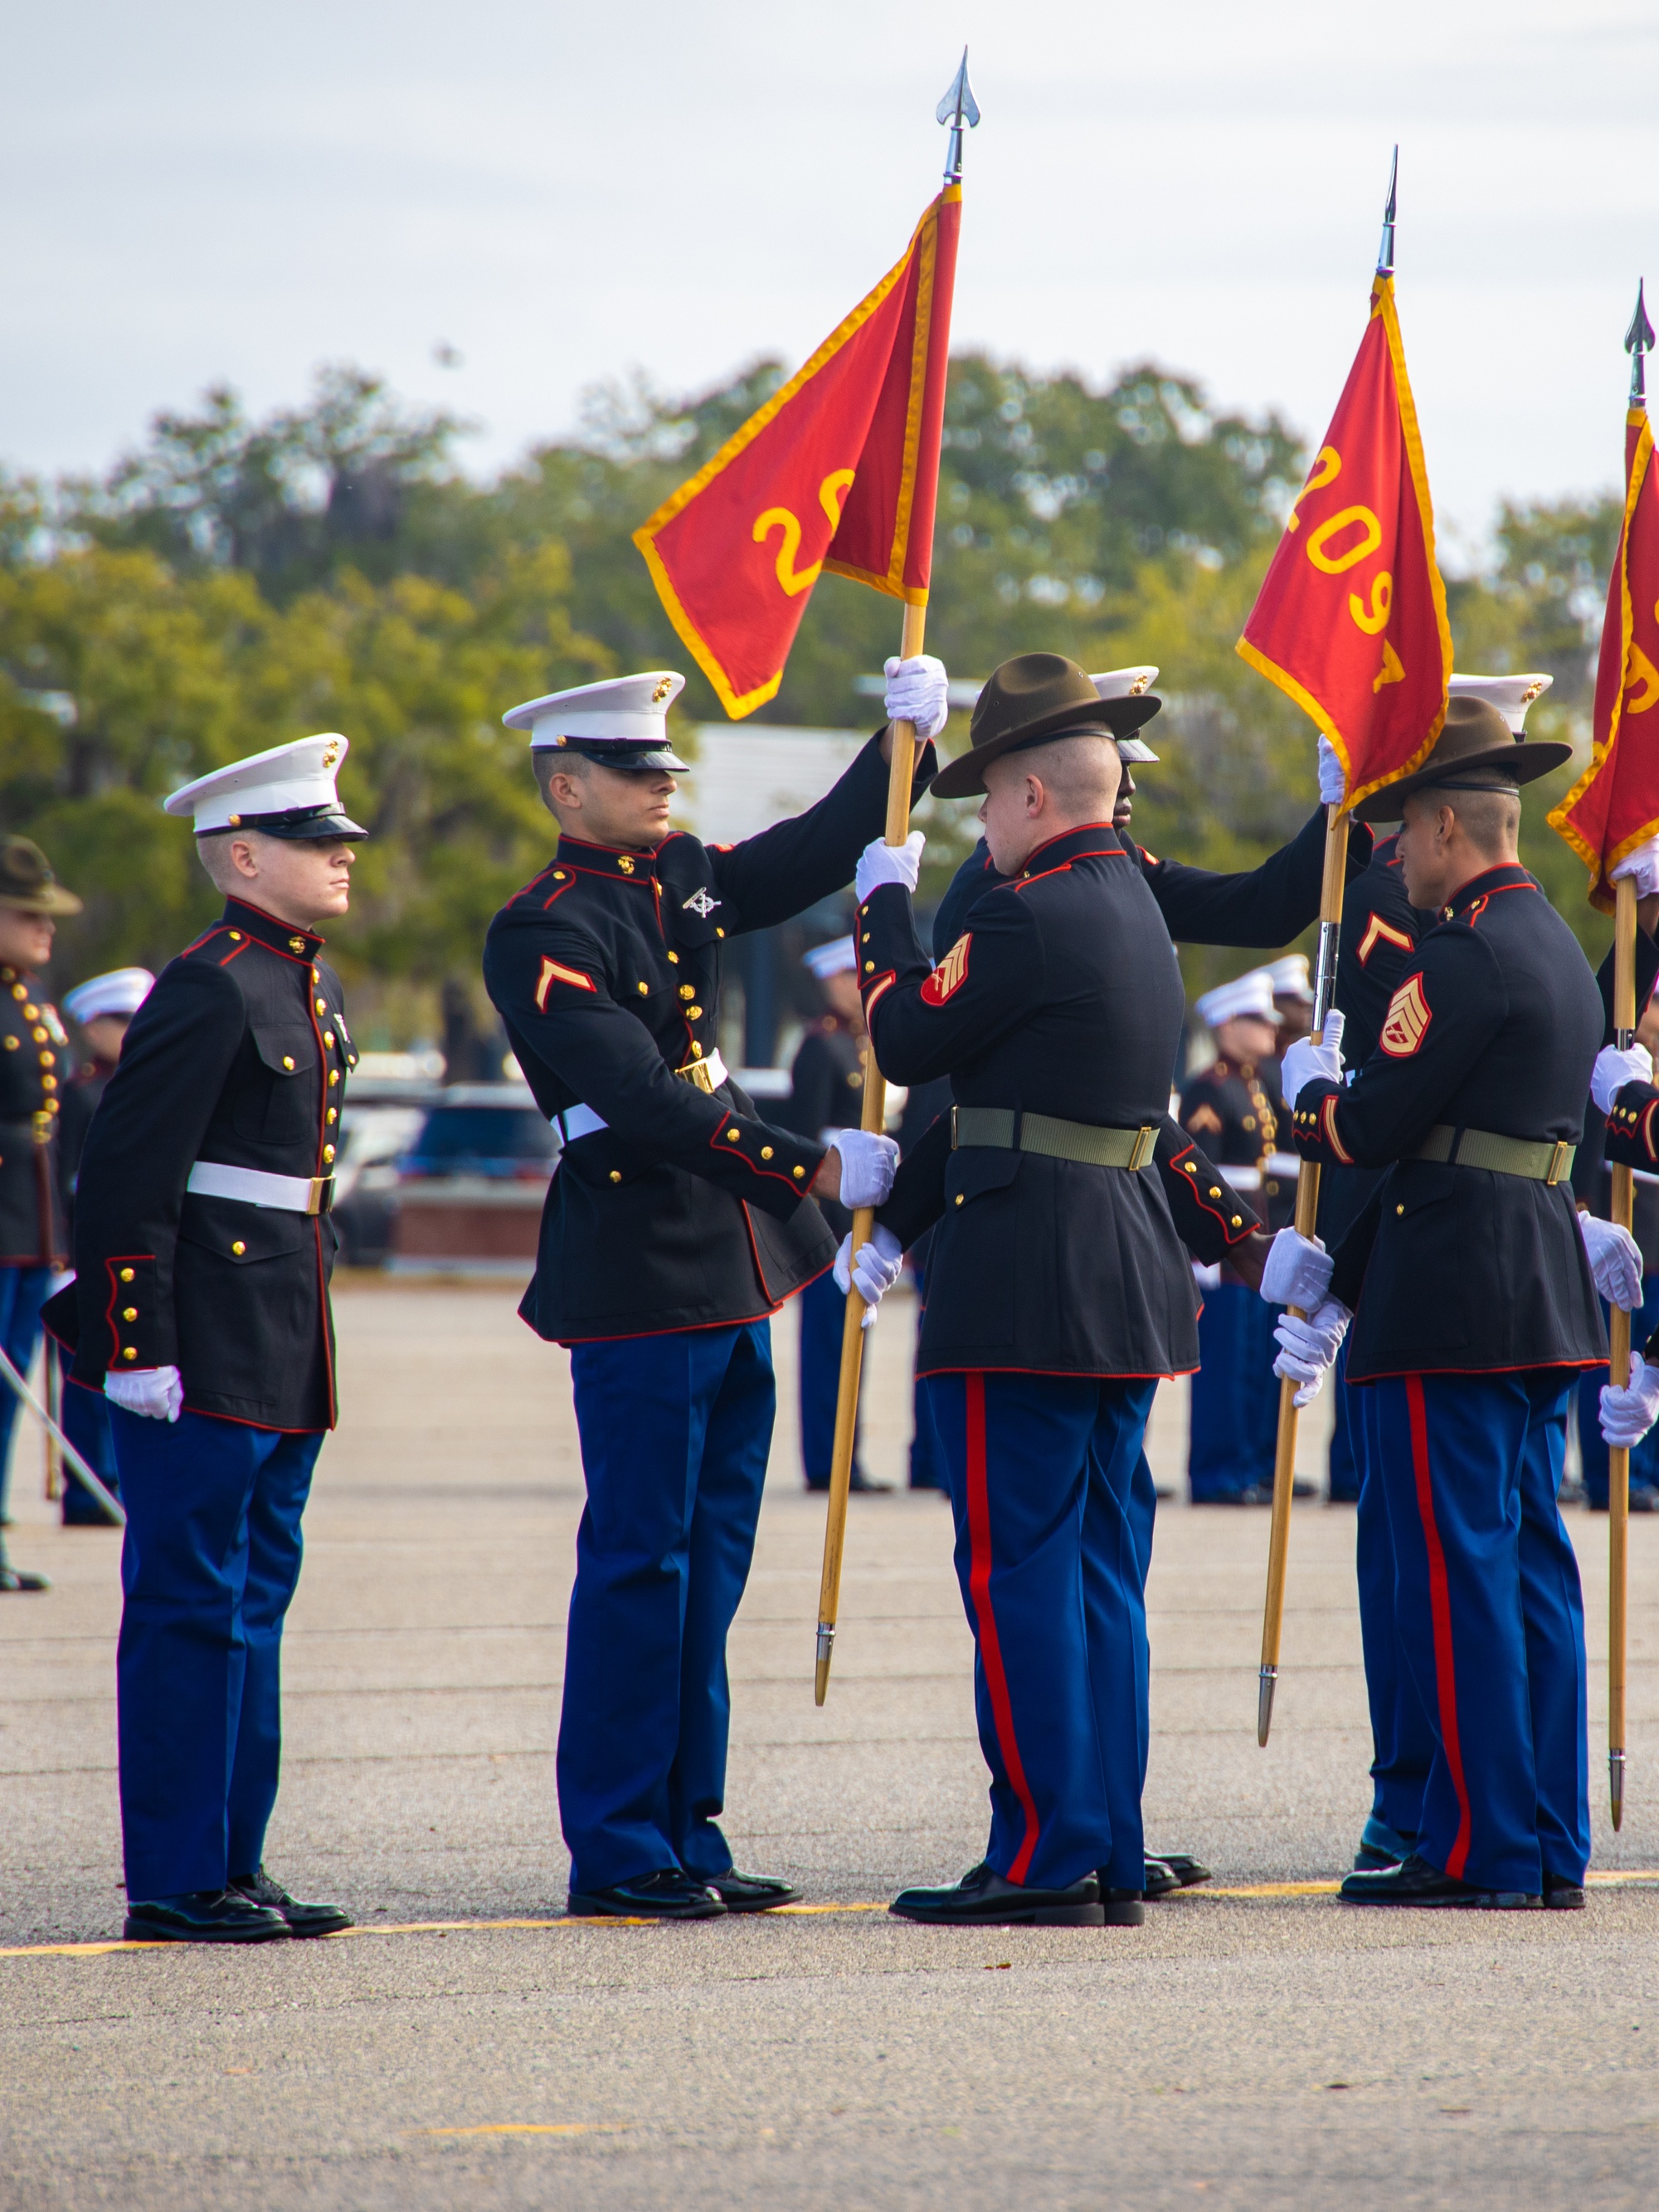 DVIDS - Images - Golf Island Orange Recruit Marine for honor of Port [Image 2096, Company, native graduate graduates Parris 3 as Corps Depot 4] platoon